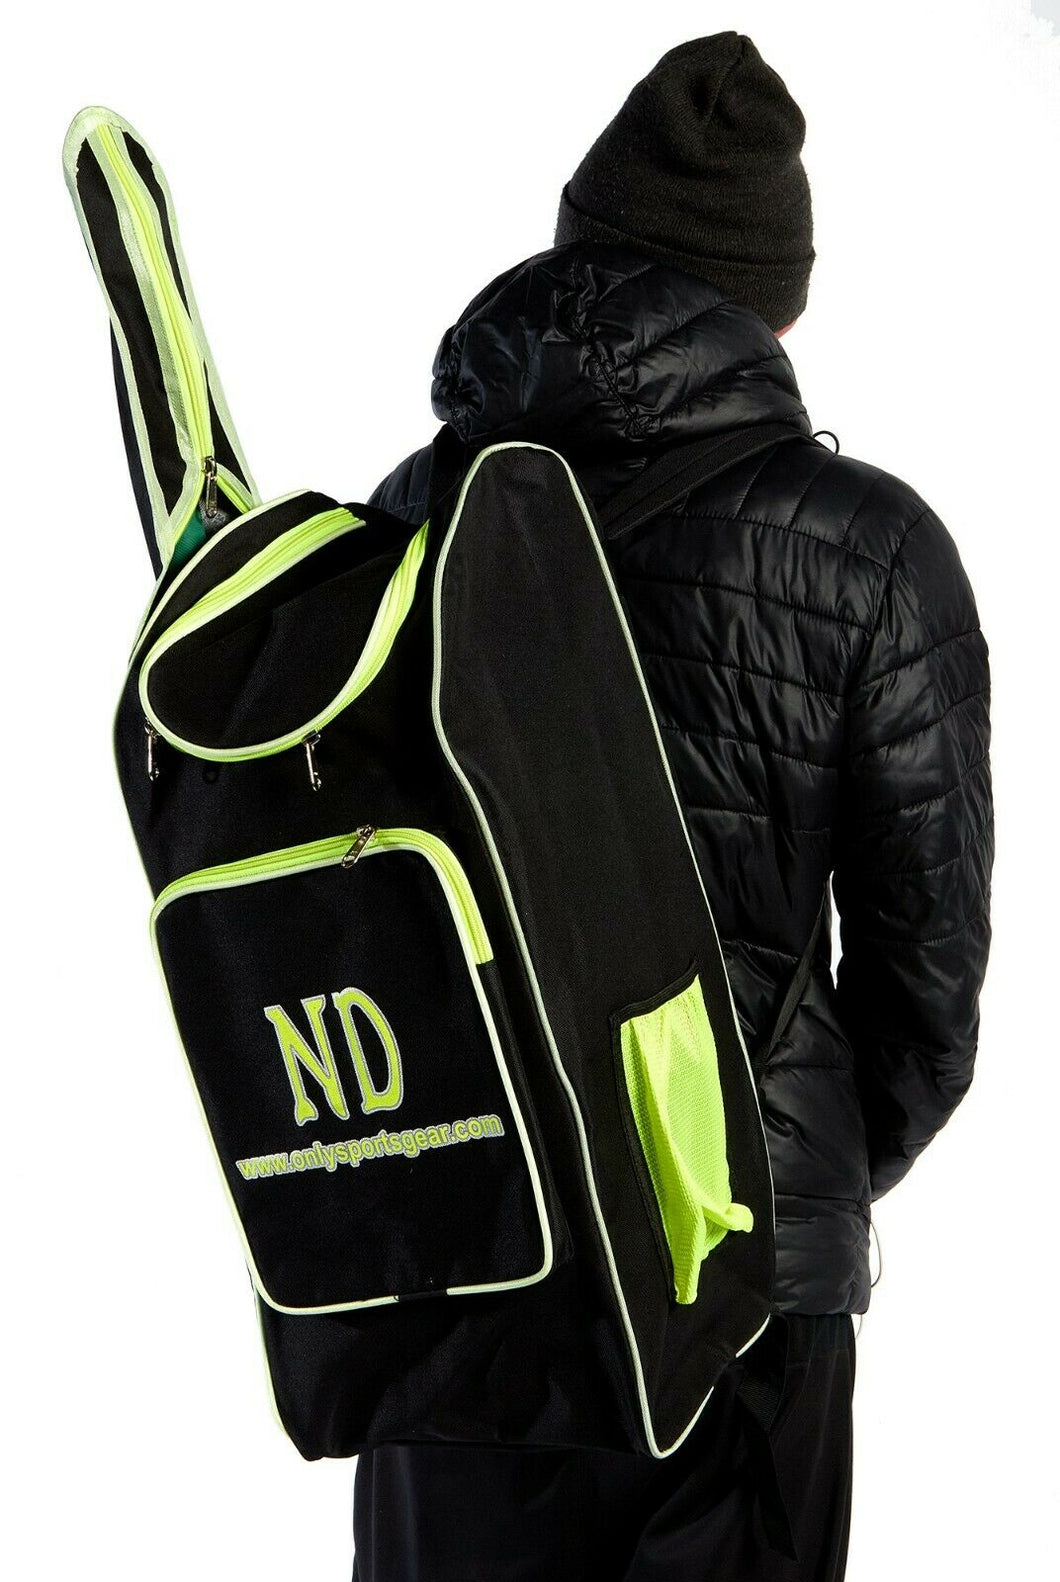 Cricket Duffle Kit Bag 65 x 24 x 26 cm Black